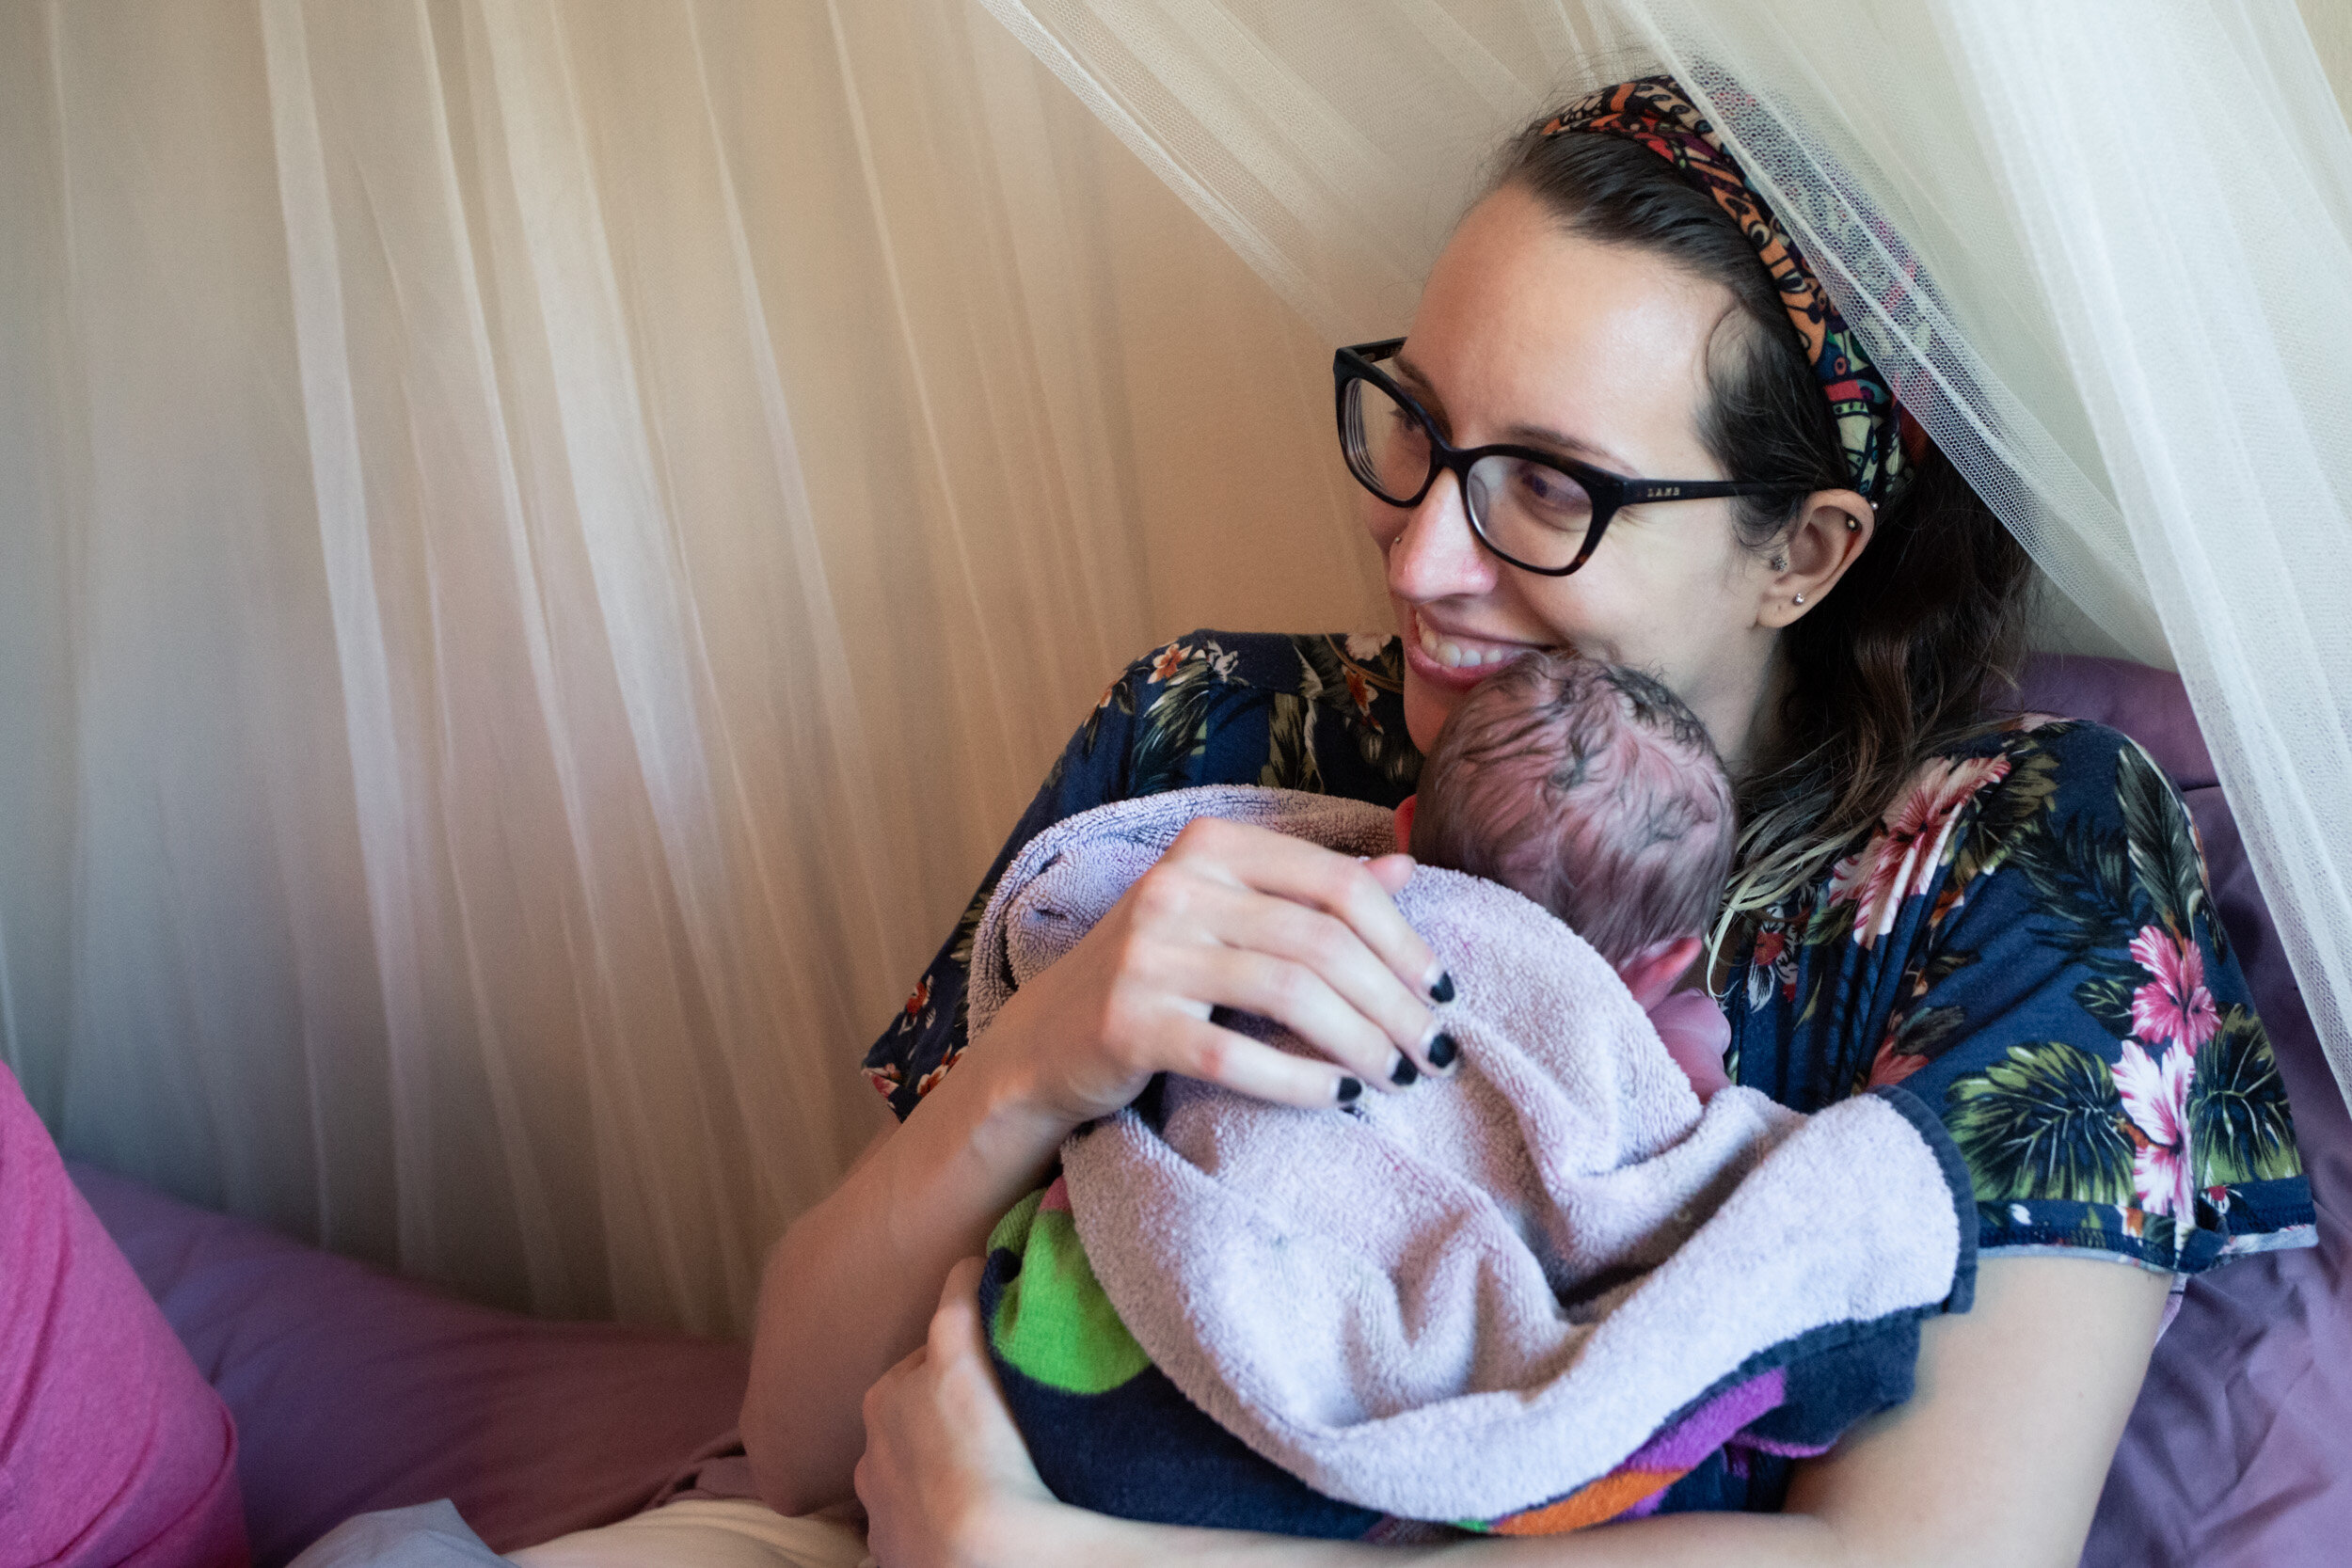 jacksonville mom holding newborn baby boy and smiling